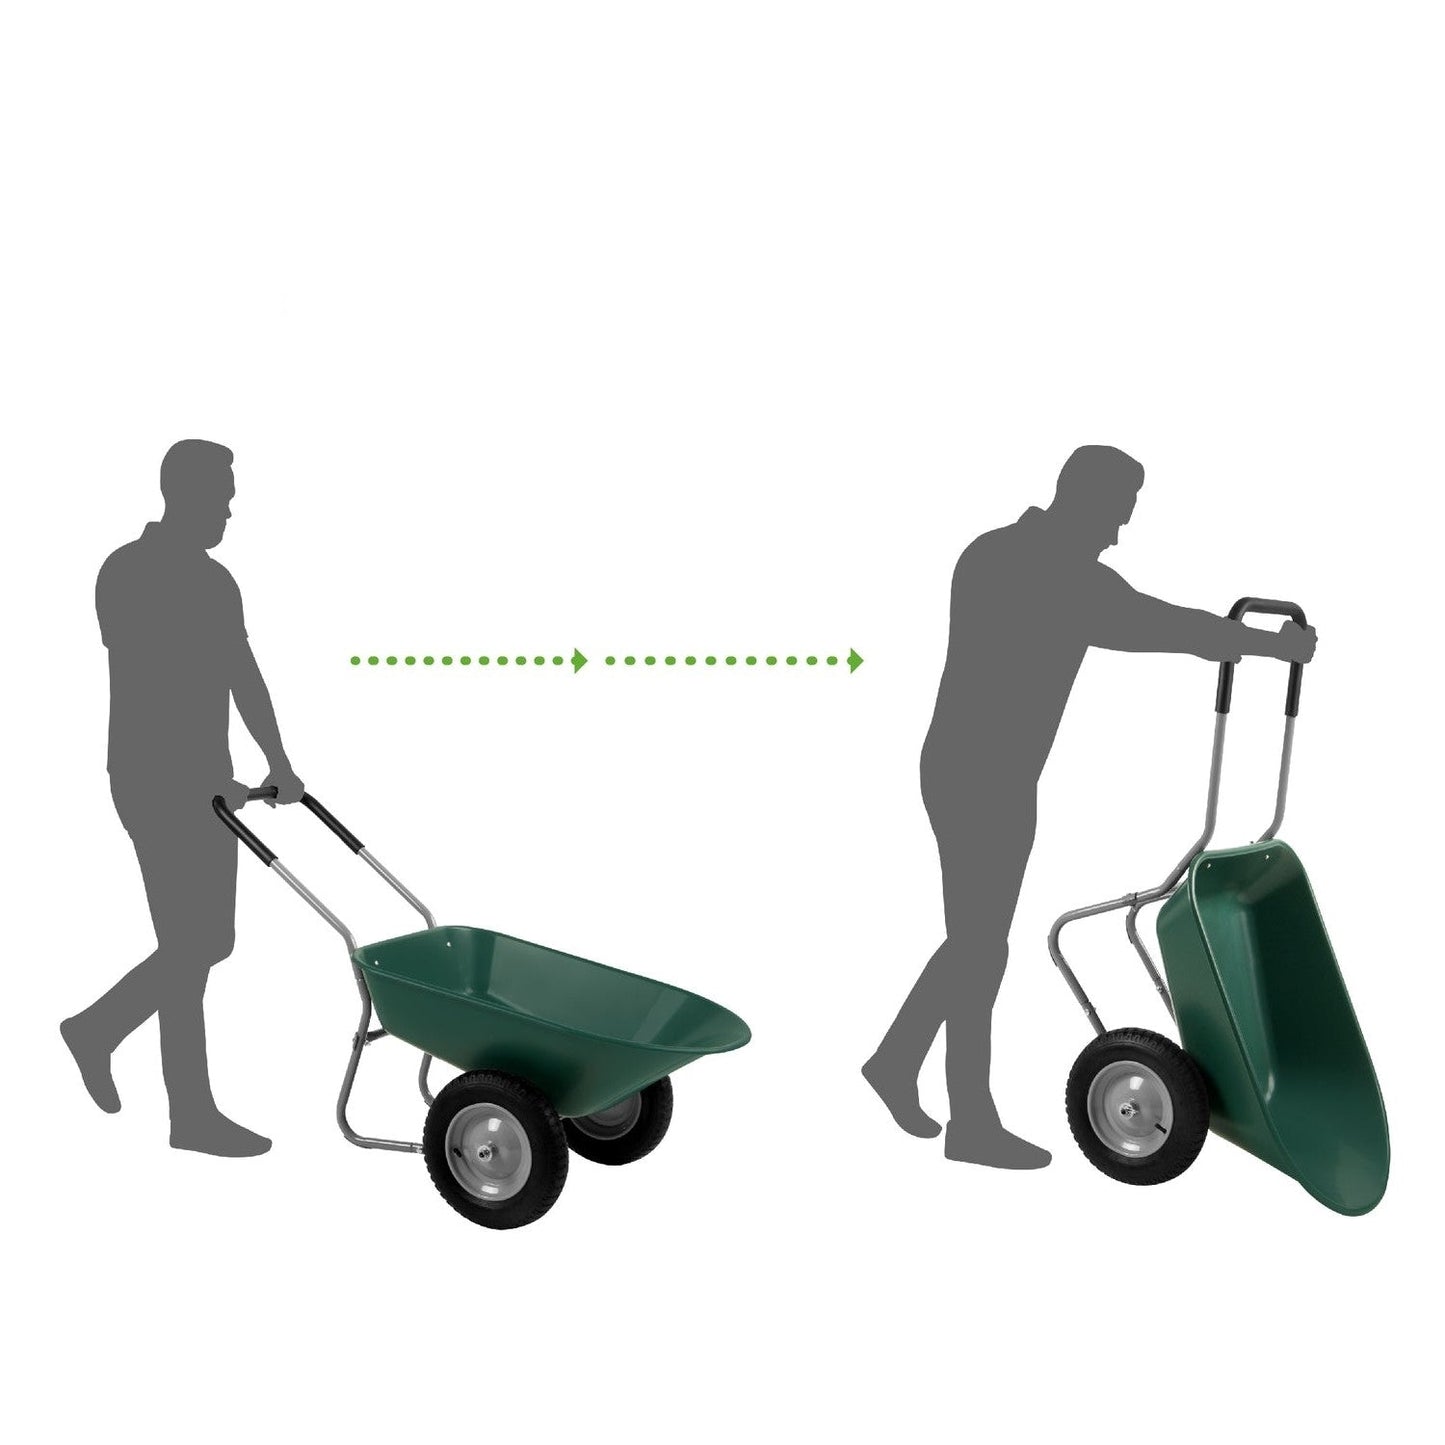 Outdoor > Gardening > Wheelbarrows Carts Wagons - Heavy Duty 2-Wheel Multipurpose Rust Proof Wheelbarrow - Green